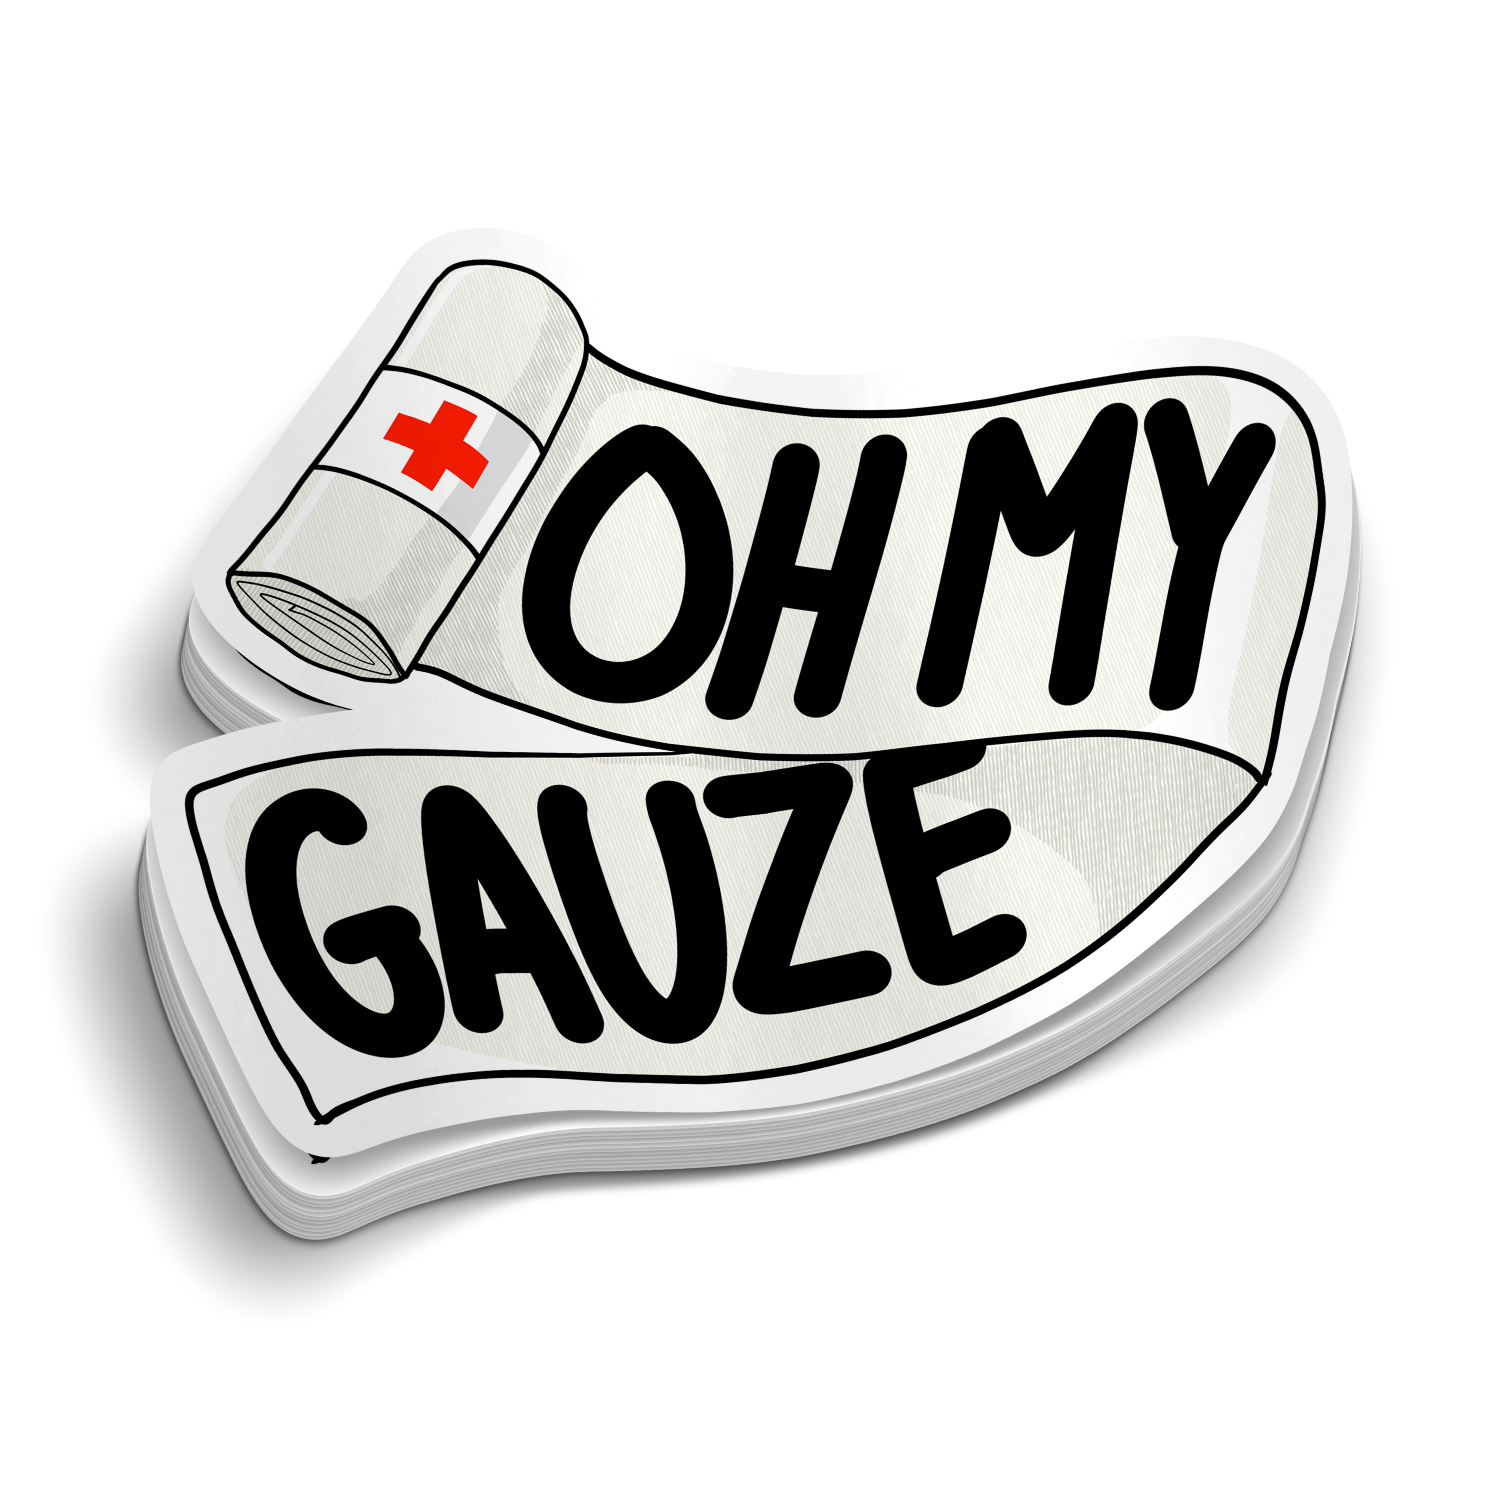 Oh My Gauze Funny Medical Sticker